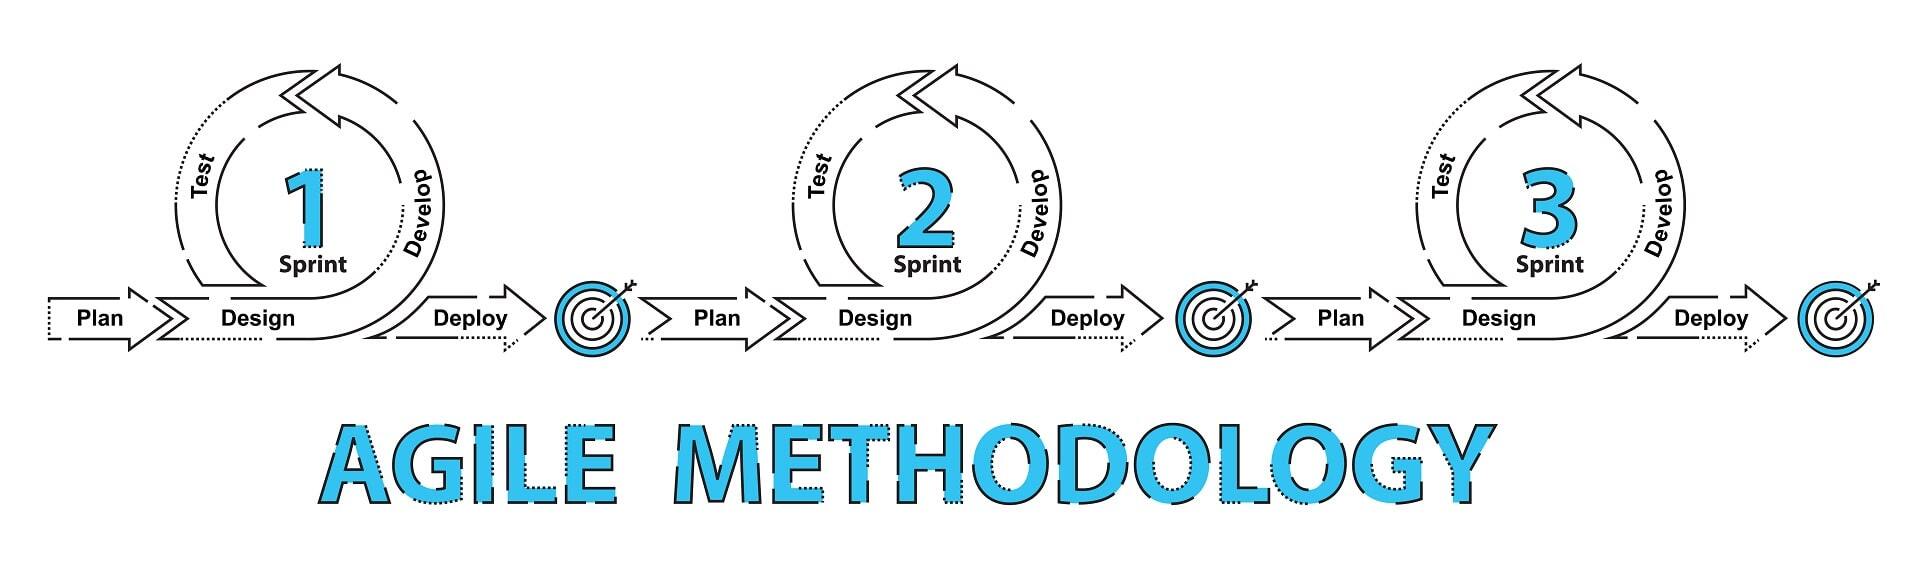 Agile methodology process broken into 3 sprints